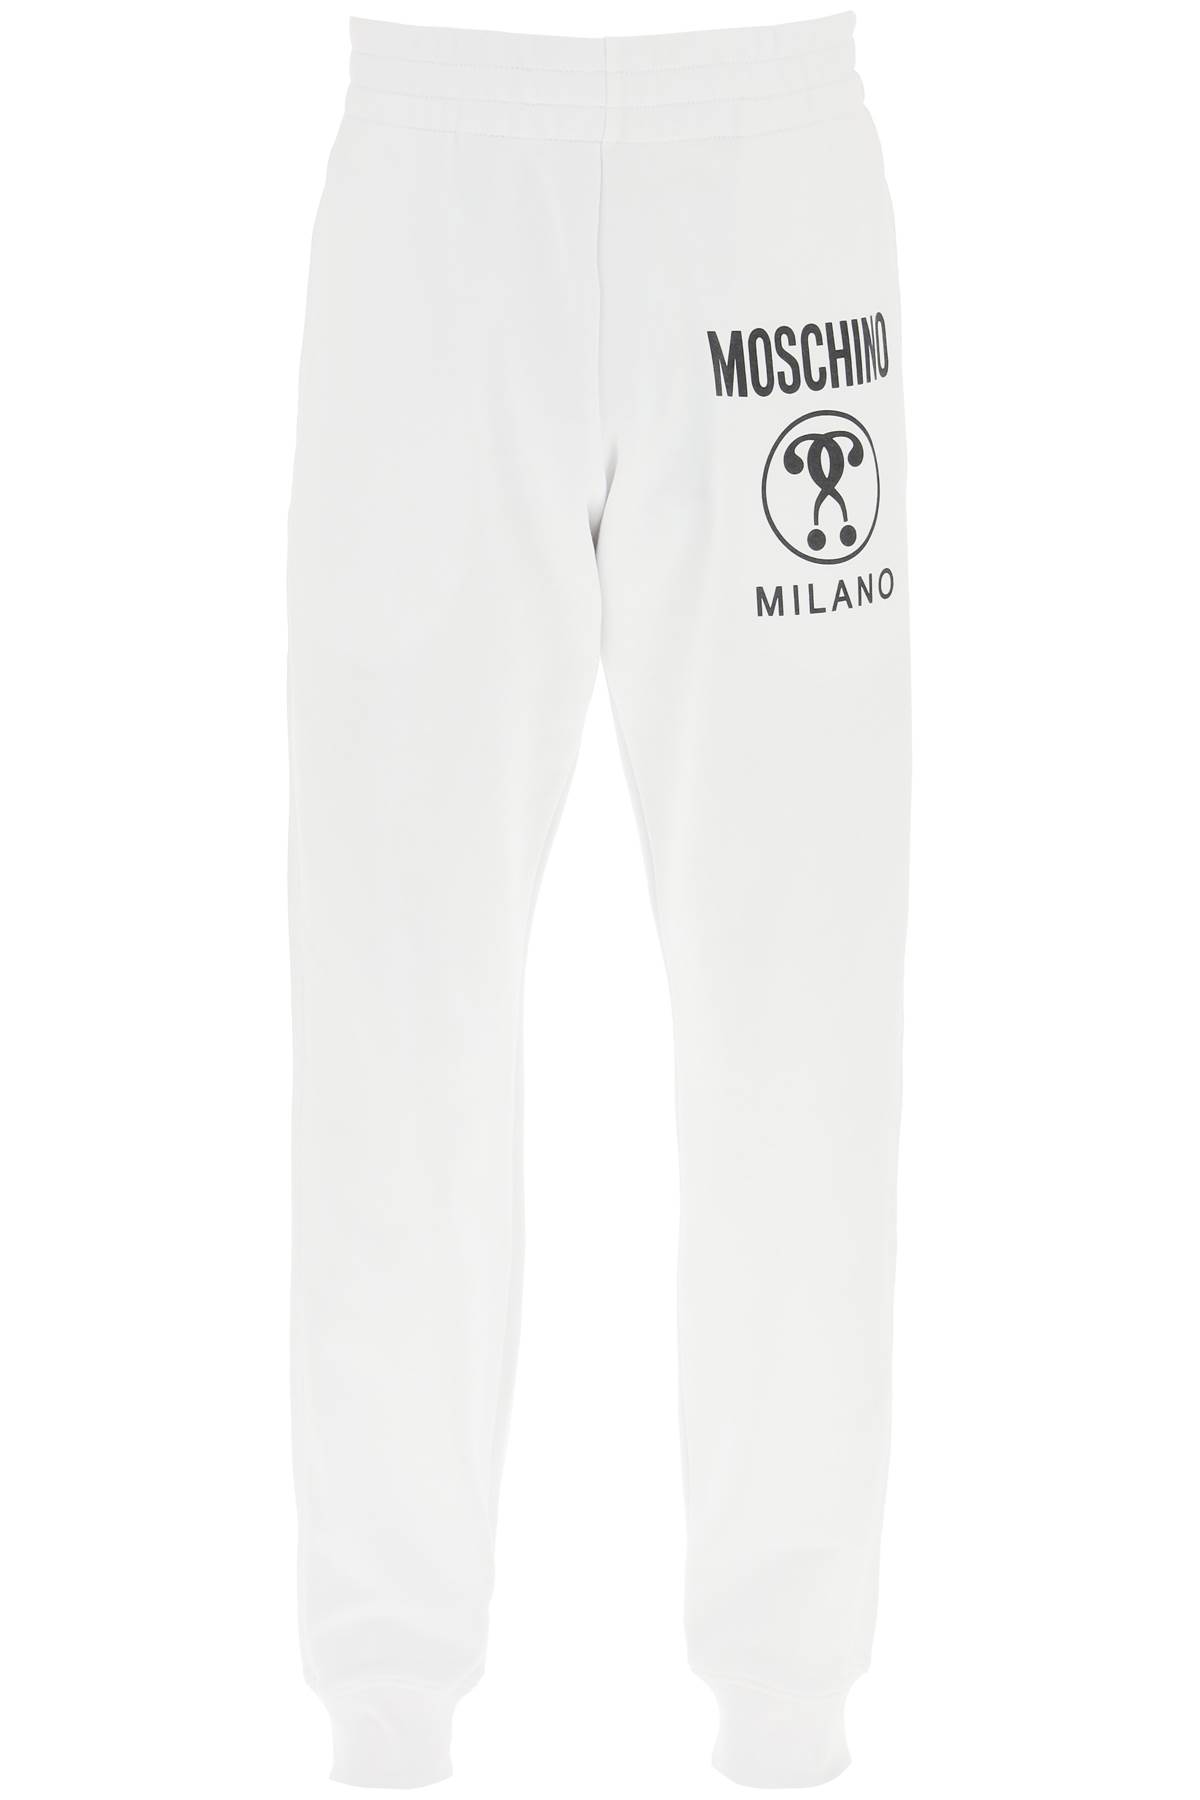 Moschino Double Question Mark Logo Sweatpants